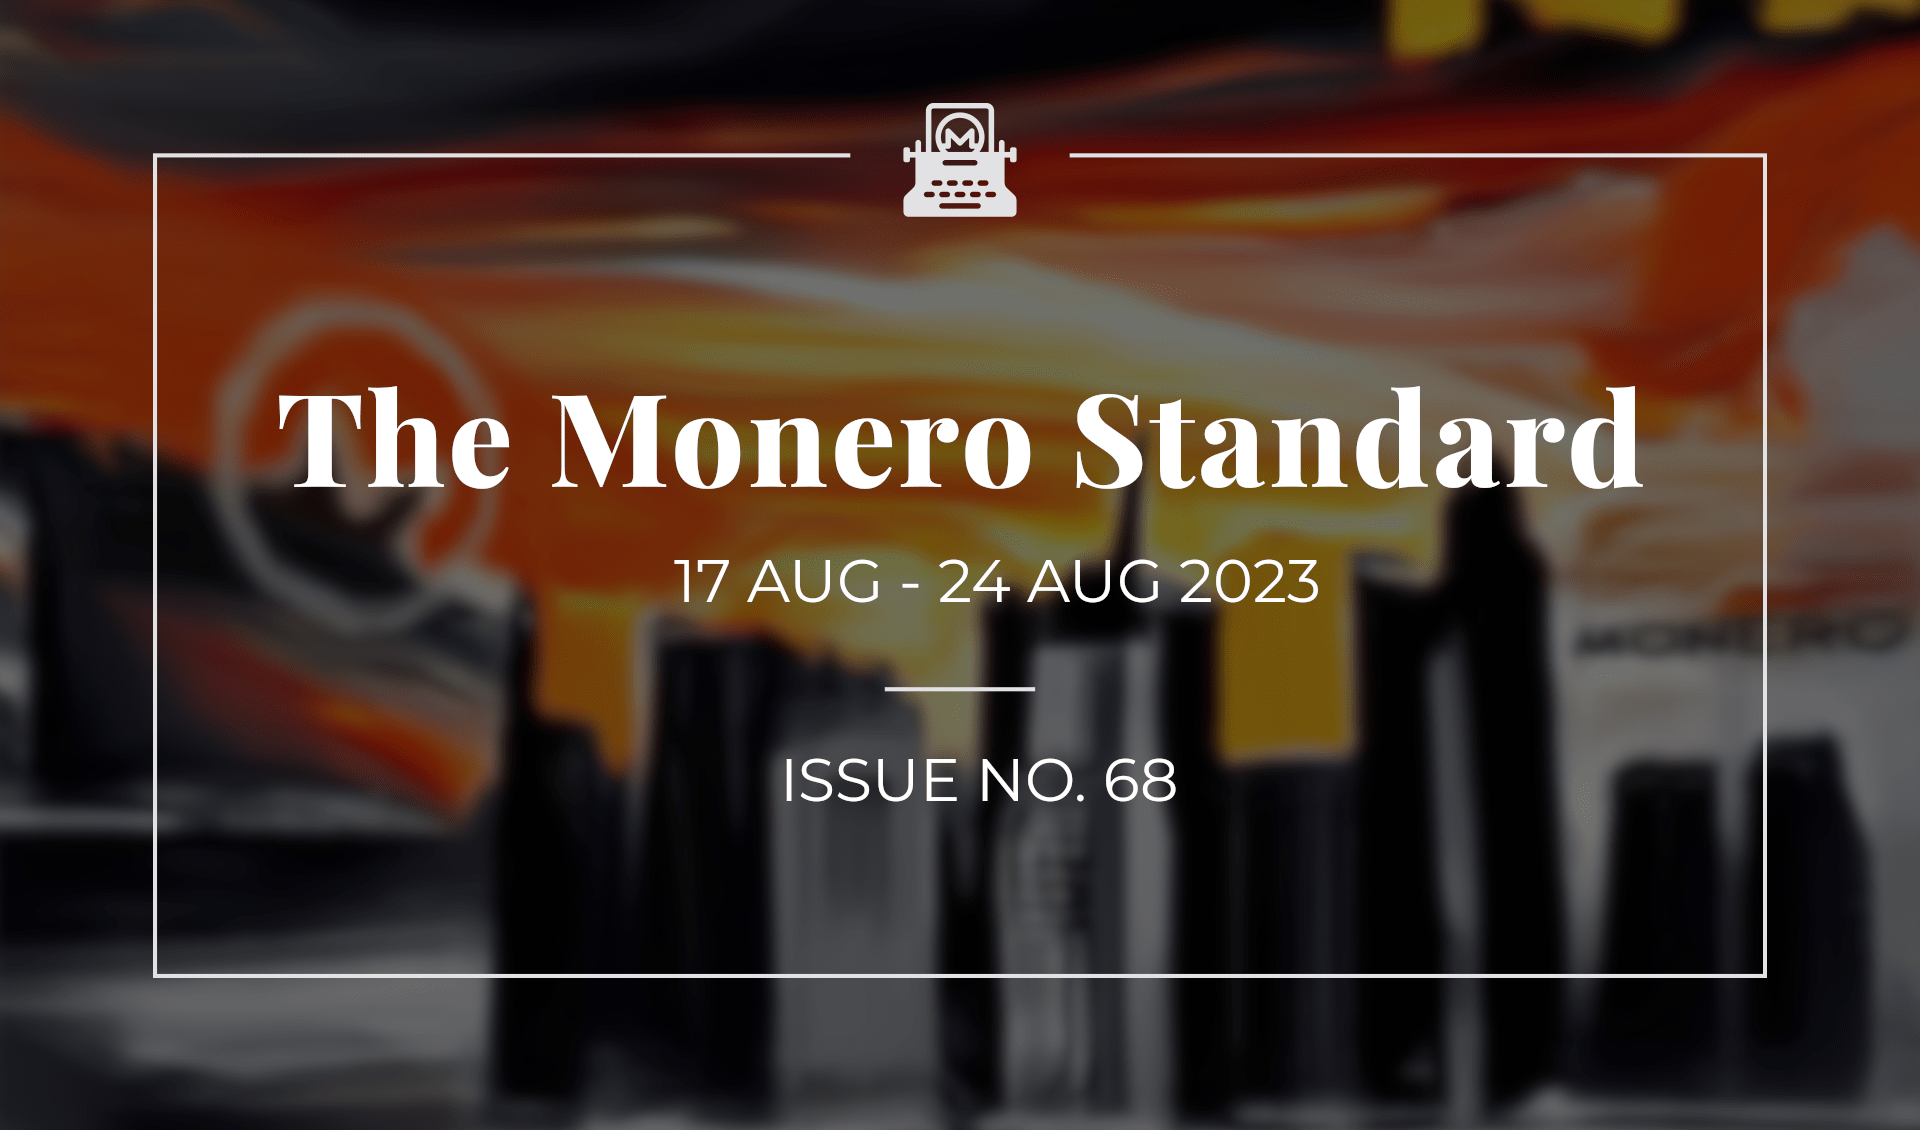 The Monero Standard #68: 17 Aug 2023 - 24 Aug 2023